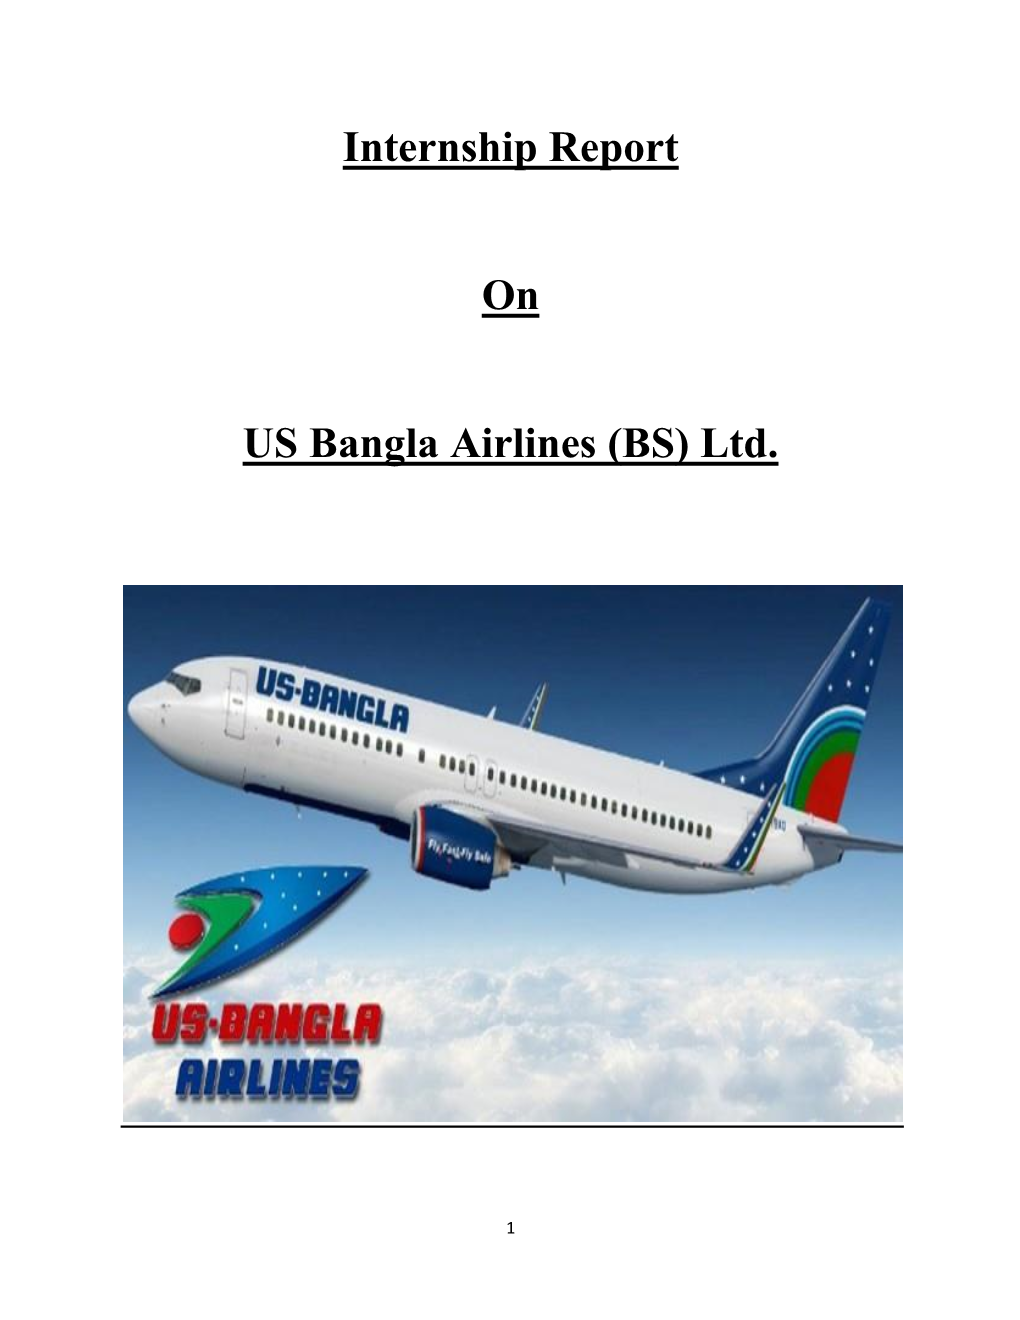 Internship Report on US Bangla Airlines